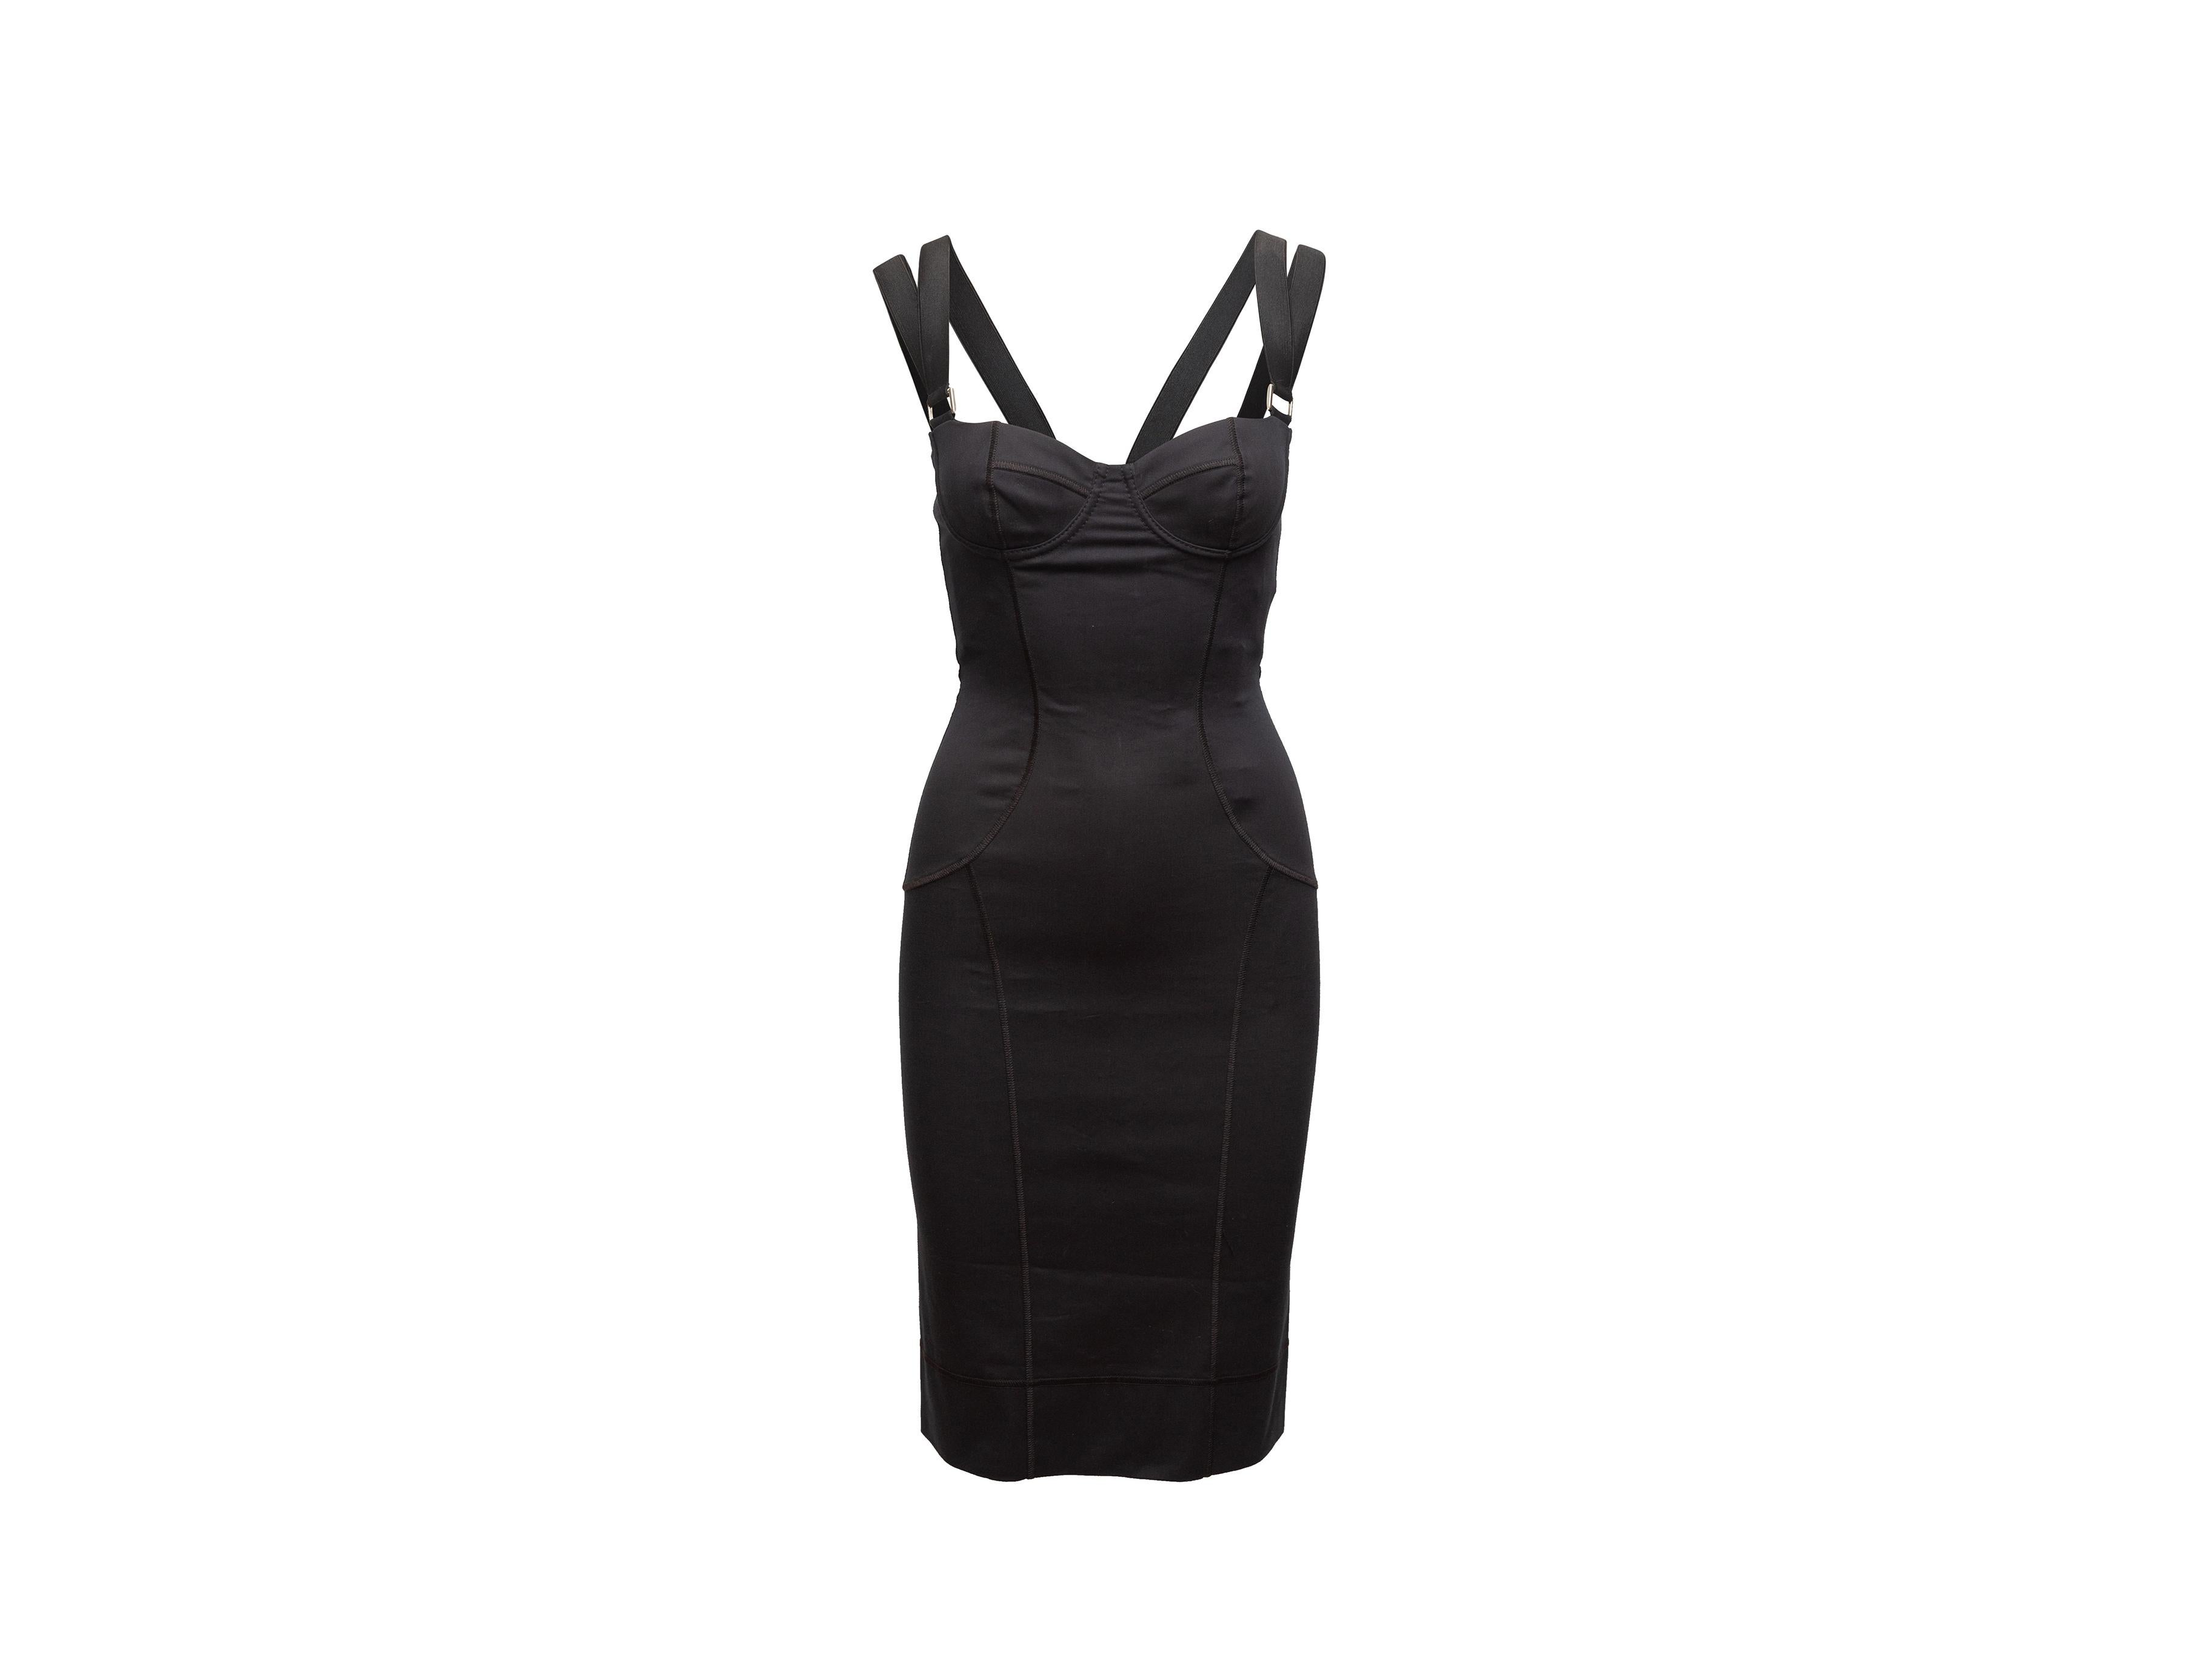 Product details: Black fitted satin bustier dress by Dolce & Gabbana. Sweetheart neckline. Elastic shoulder straps. Exposed zip closure at center back. Designer size 38. 28